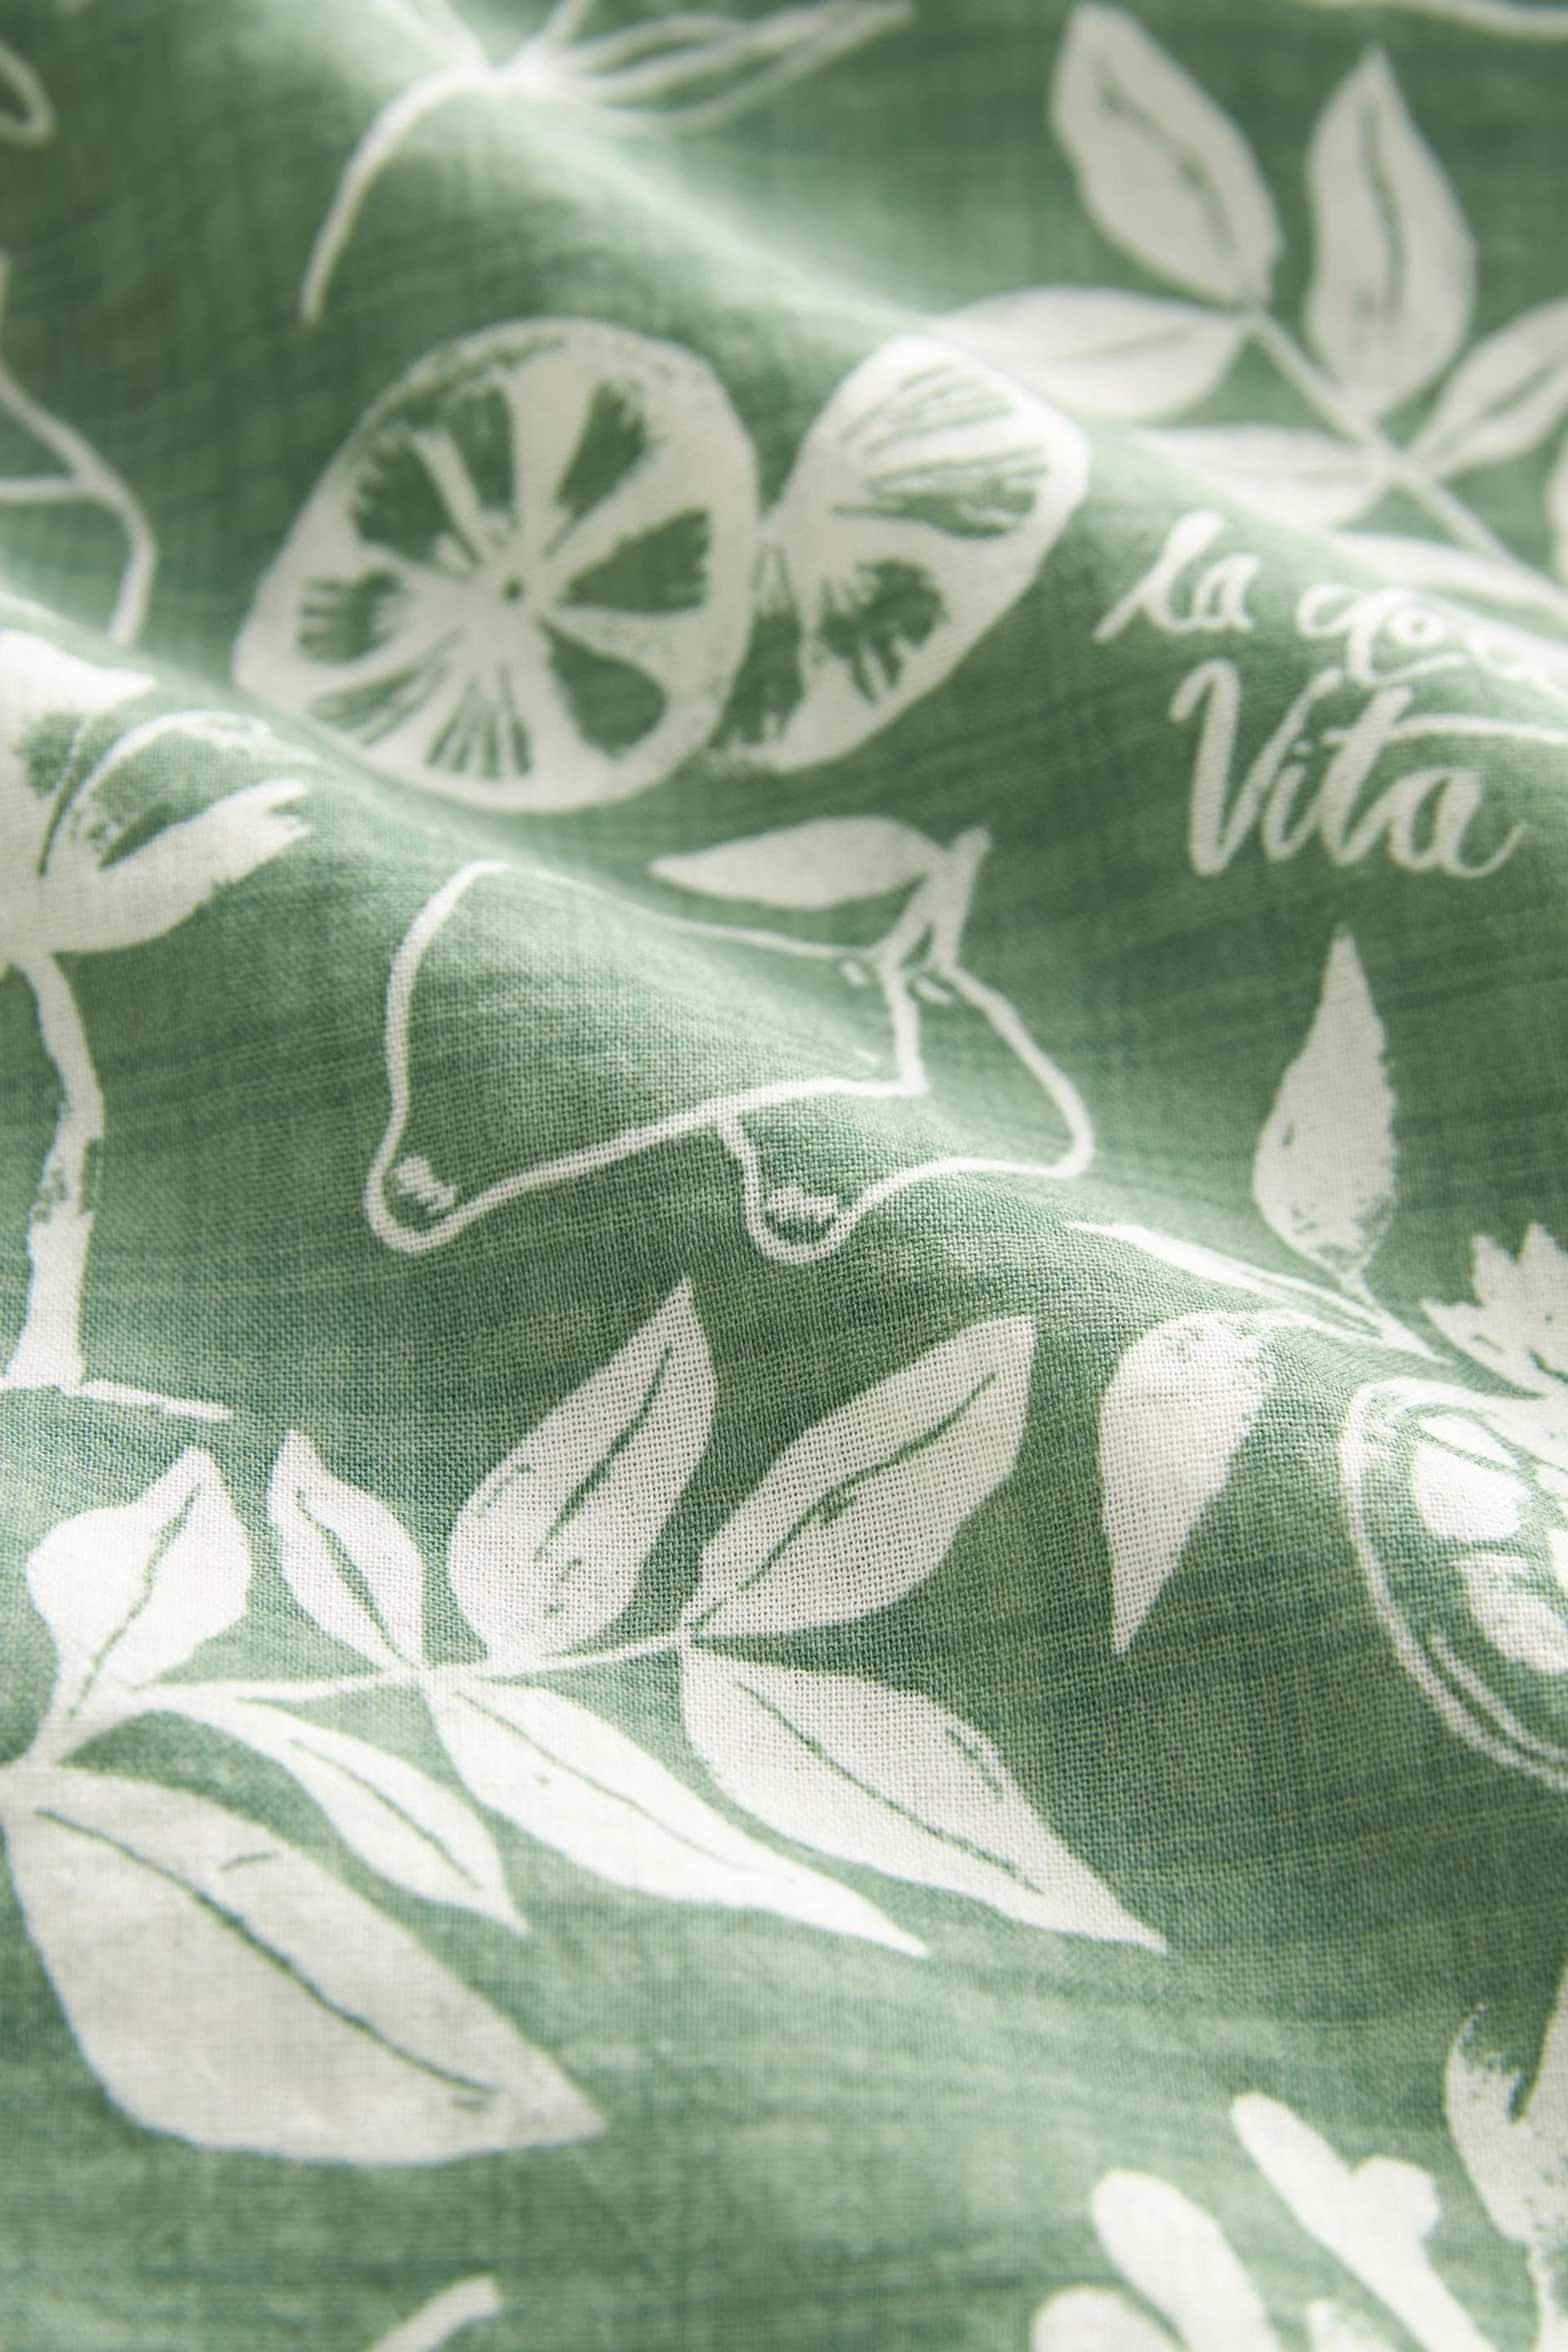 Green Floral Print Short Sleeve Tie Neck Bardot Blouse - Image 6 of 6